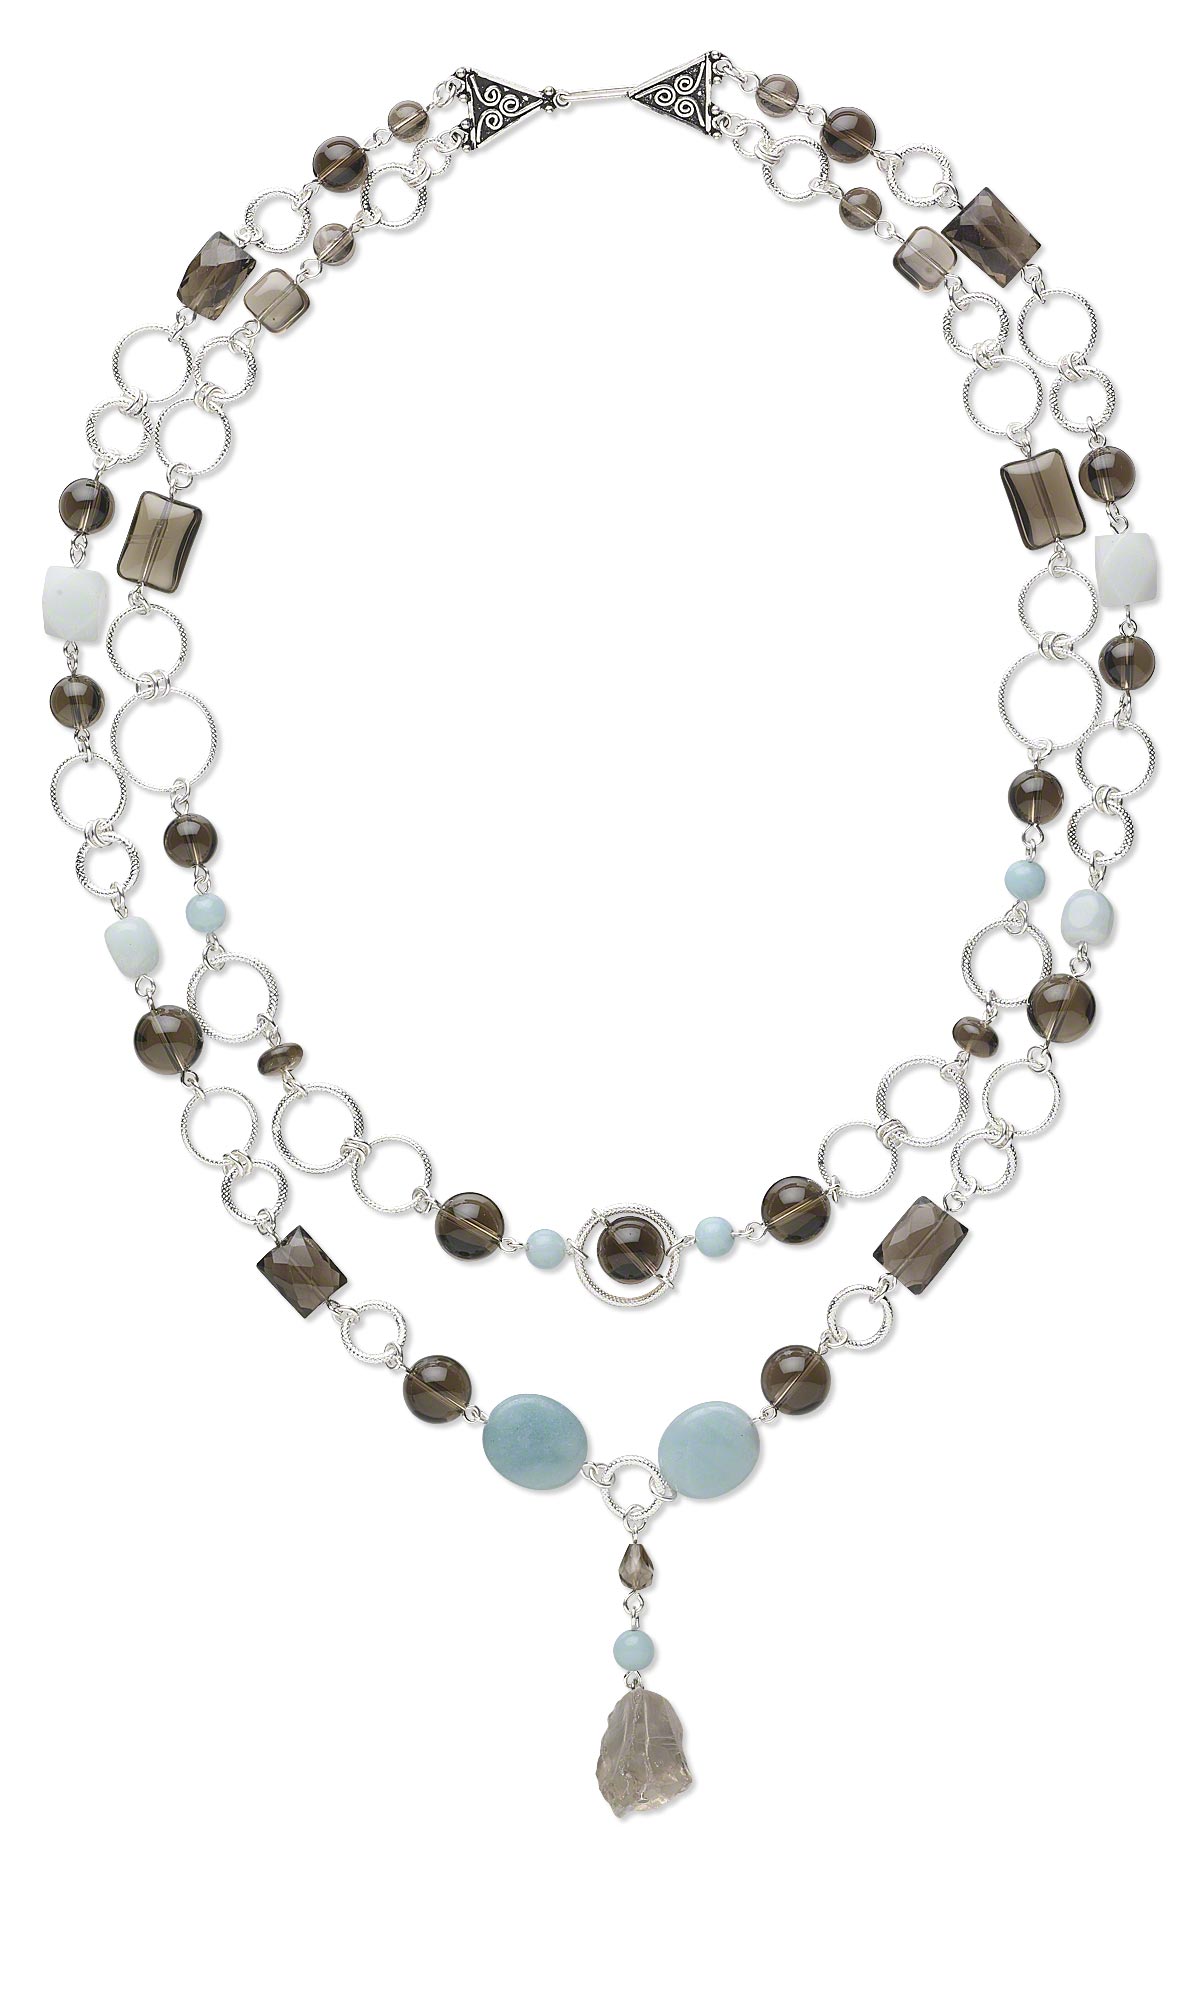 Jewelry Design - Double-Strand Necklace with Smoky Quartz and Amazonite ...